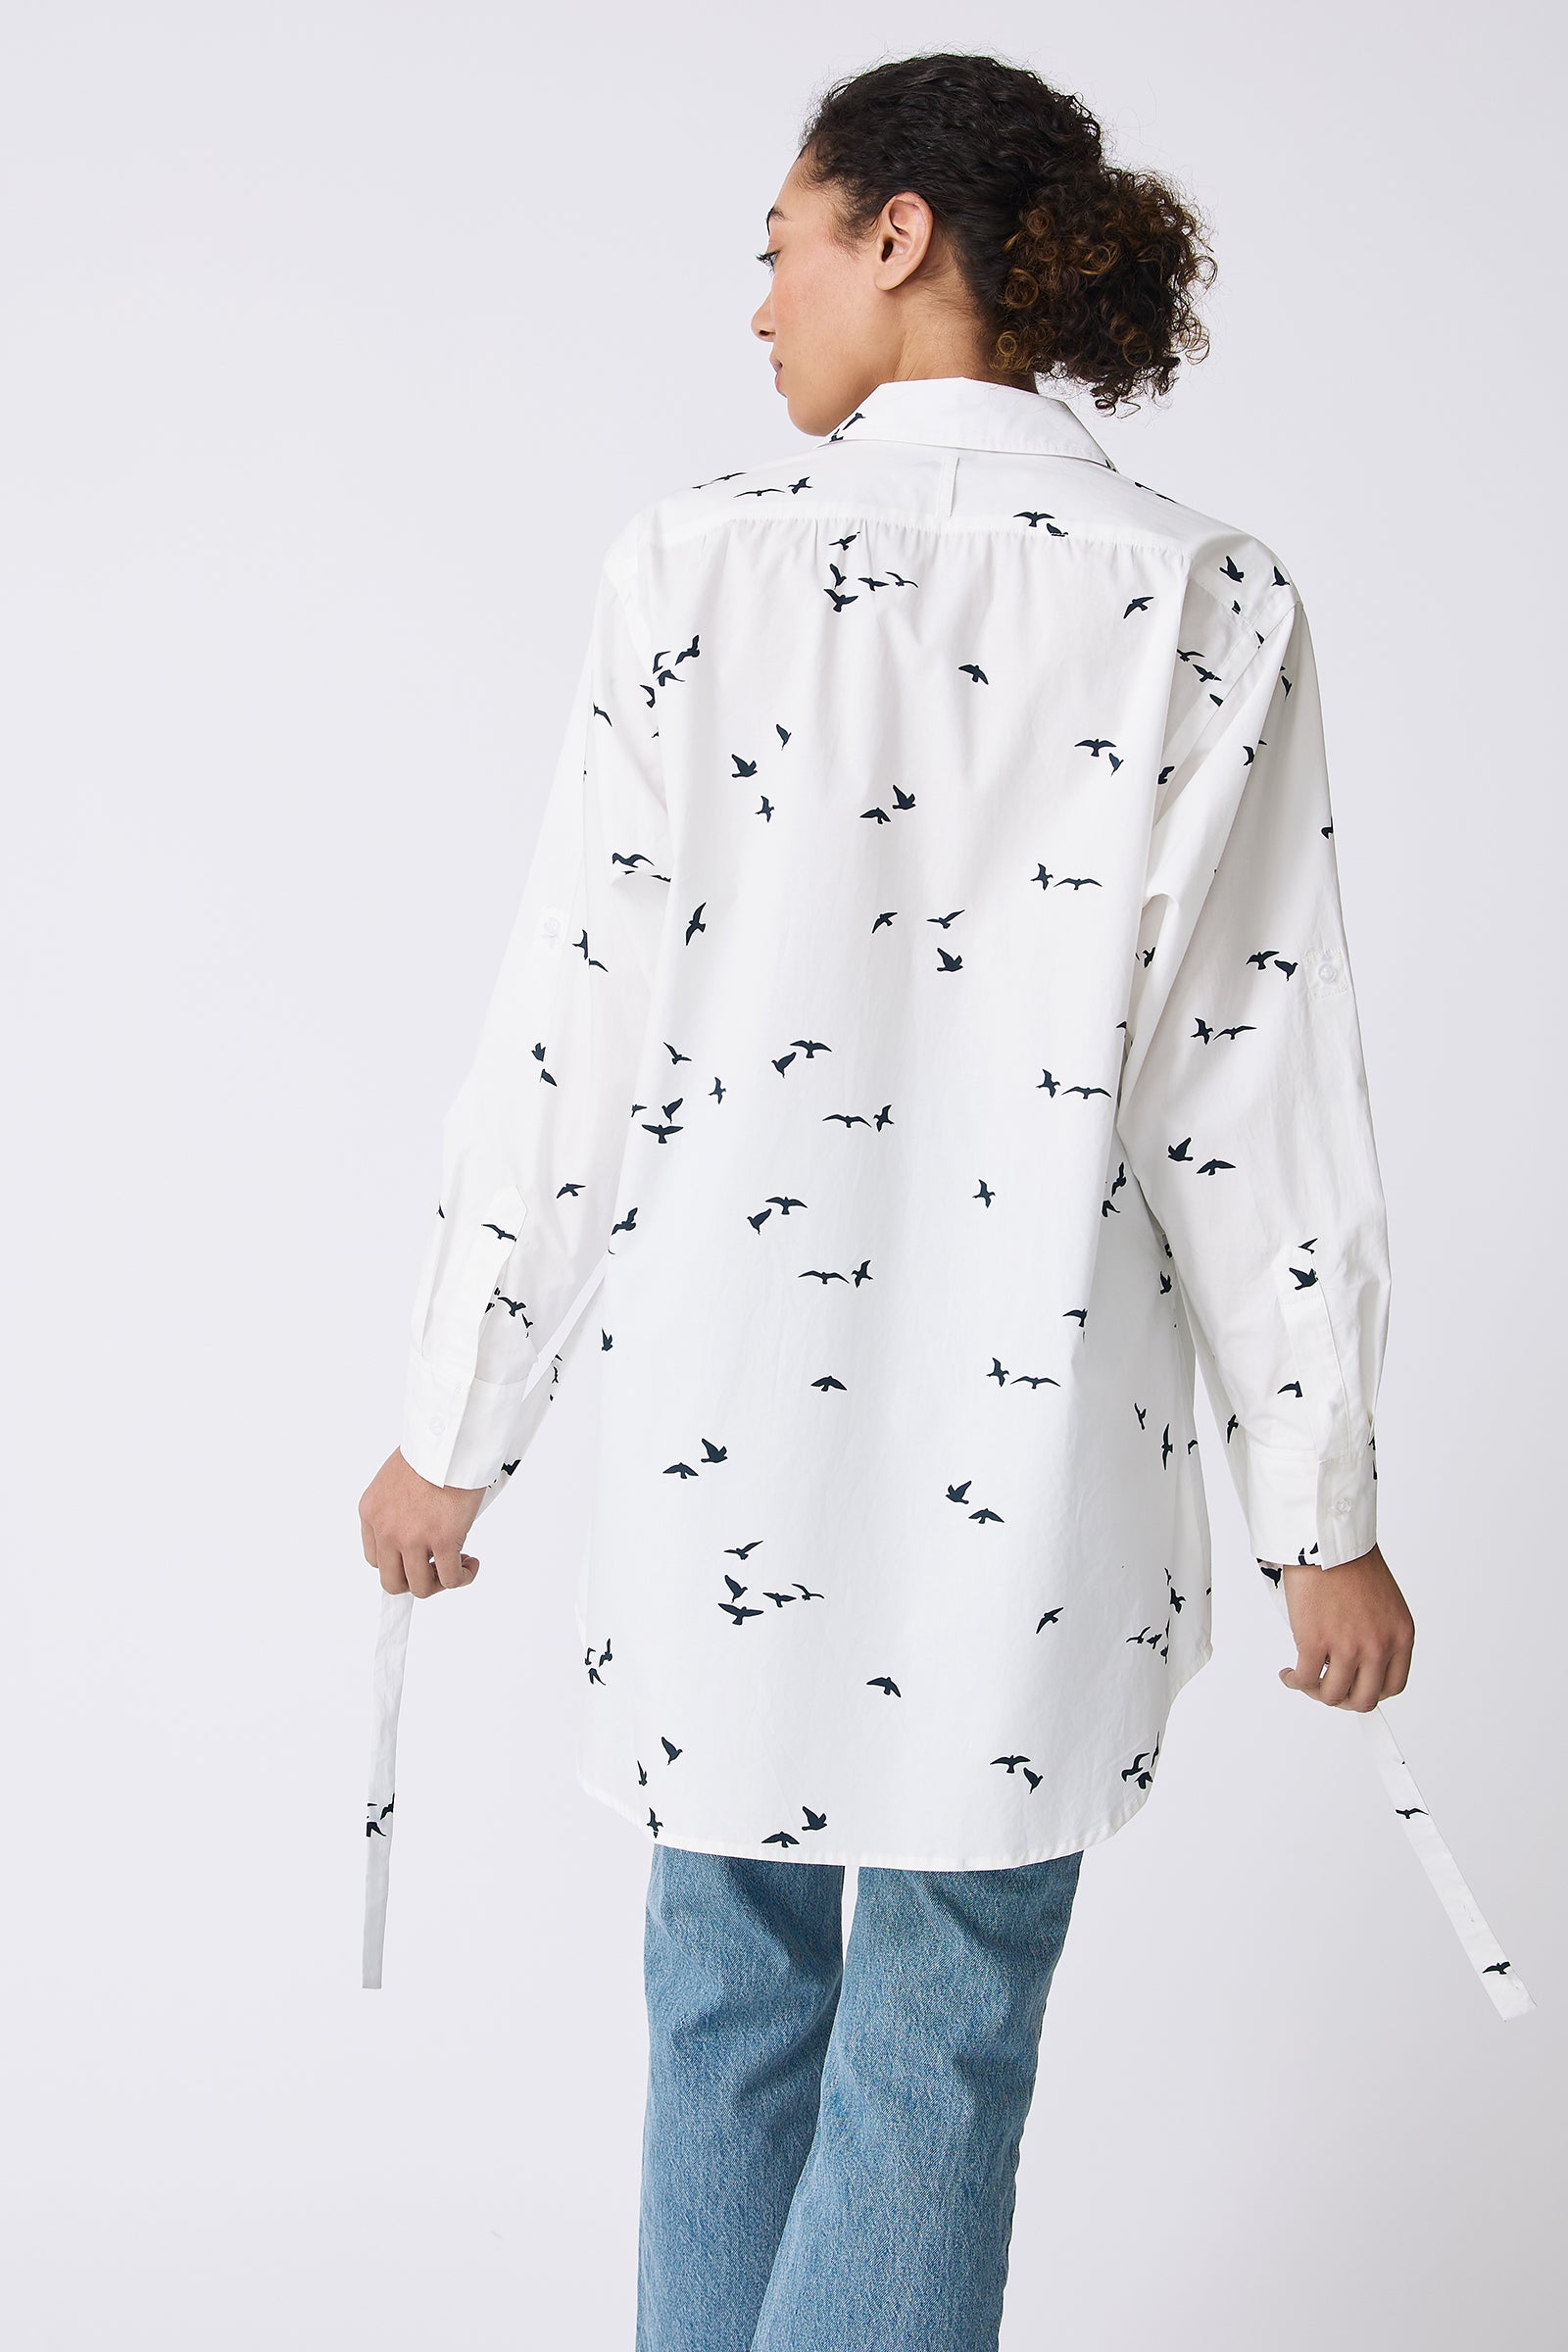 Kal Rieman Deanna Shirt in White Bird Print on model back view